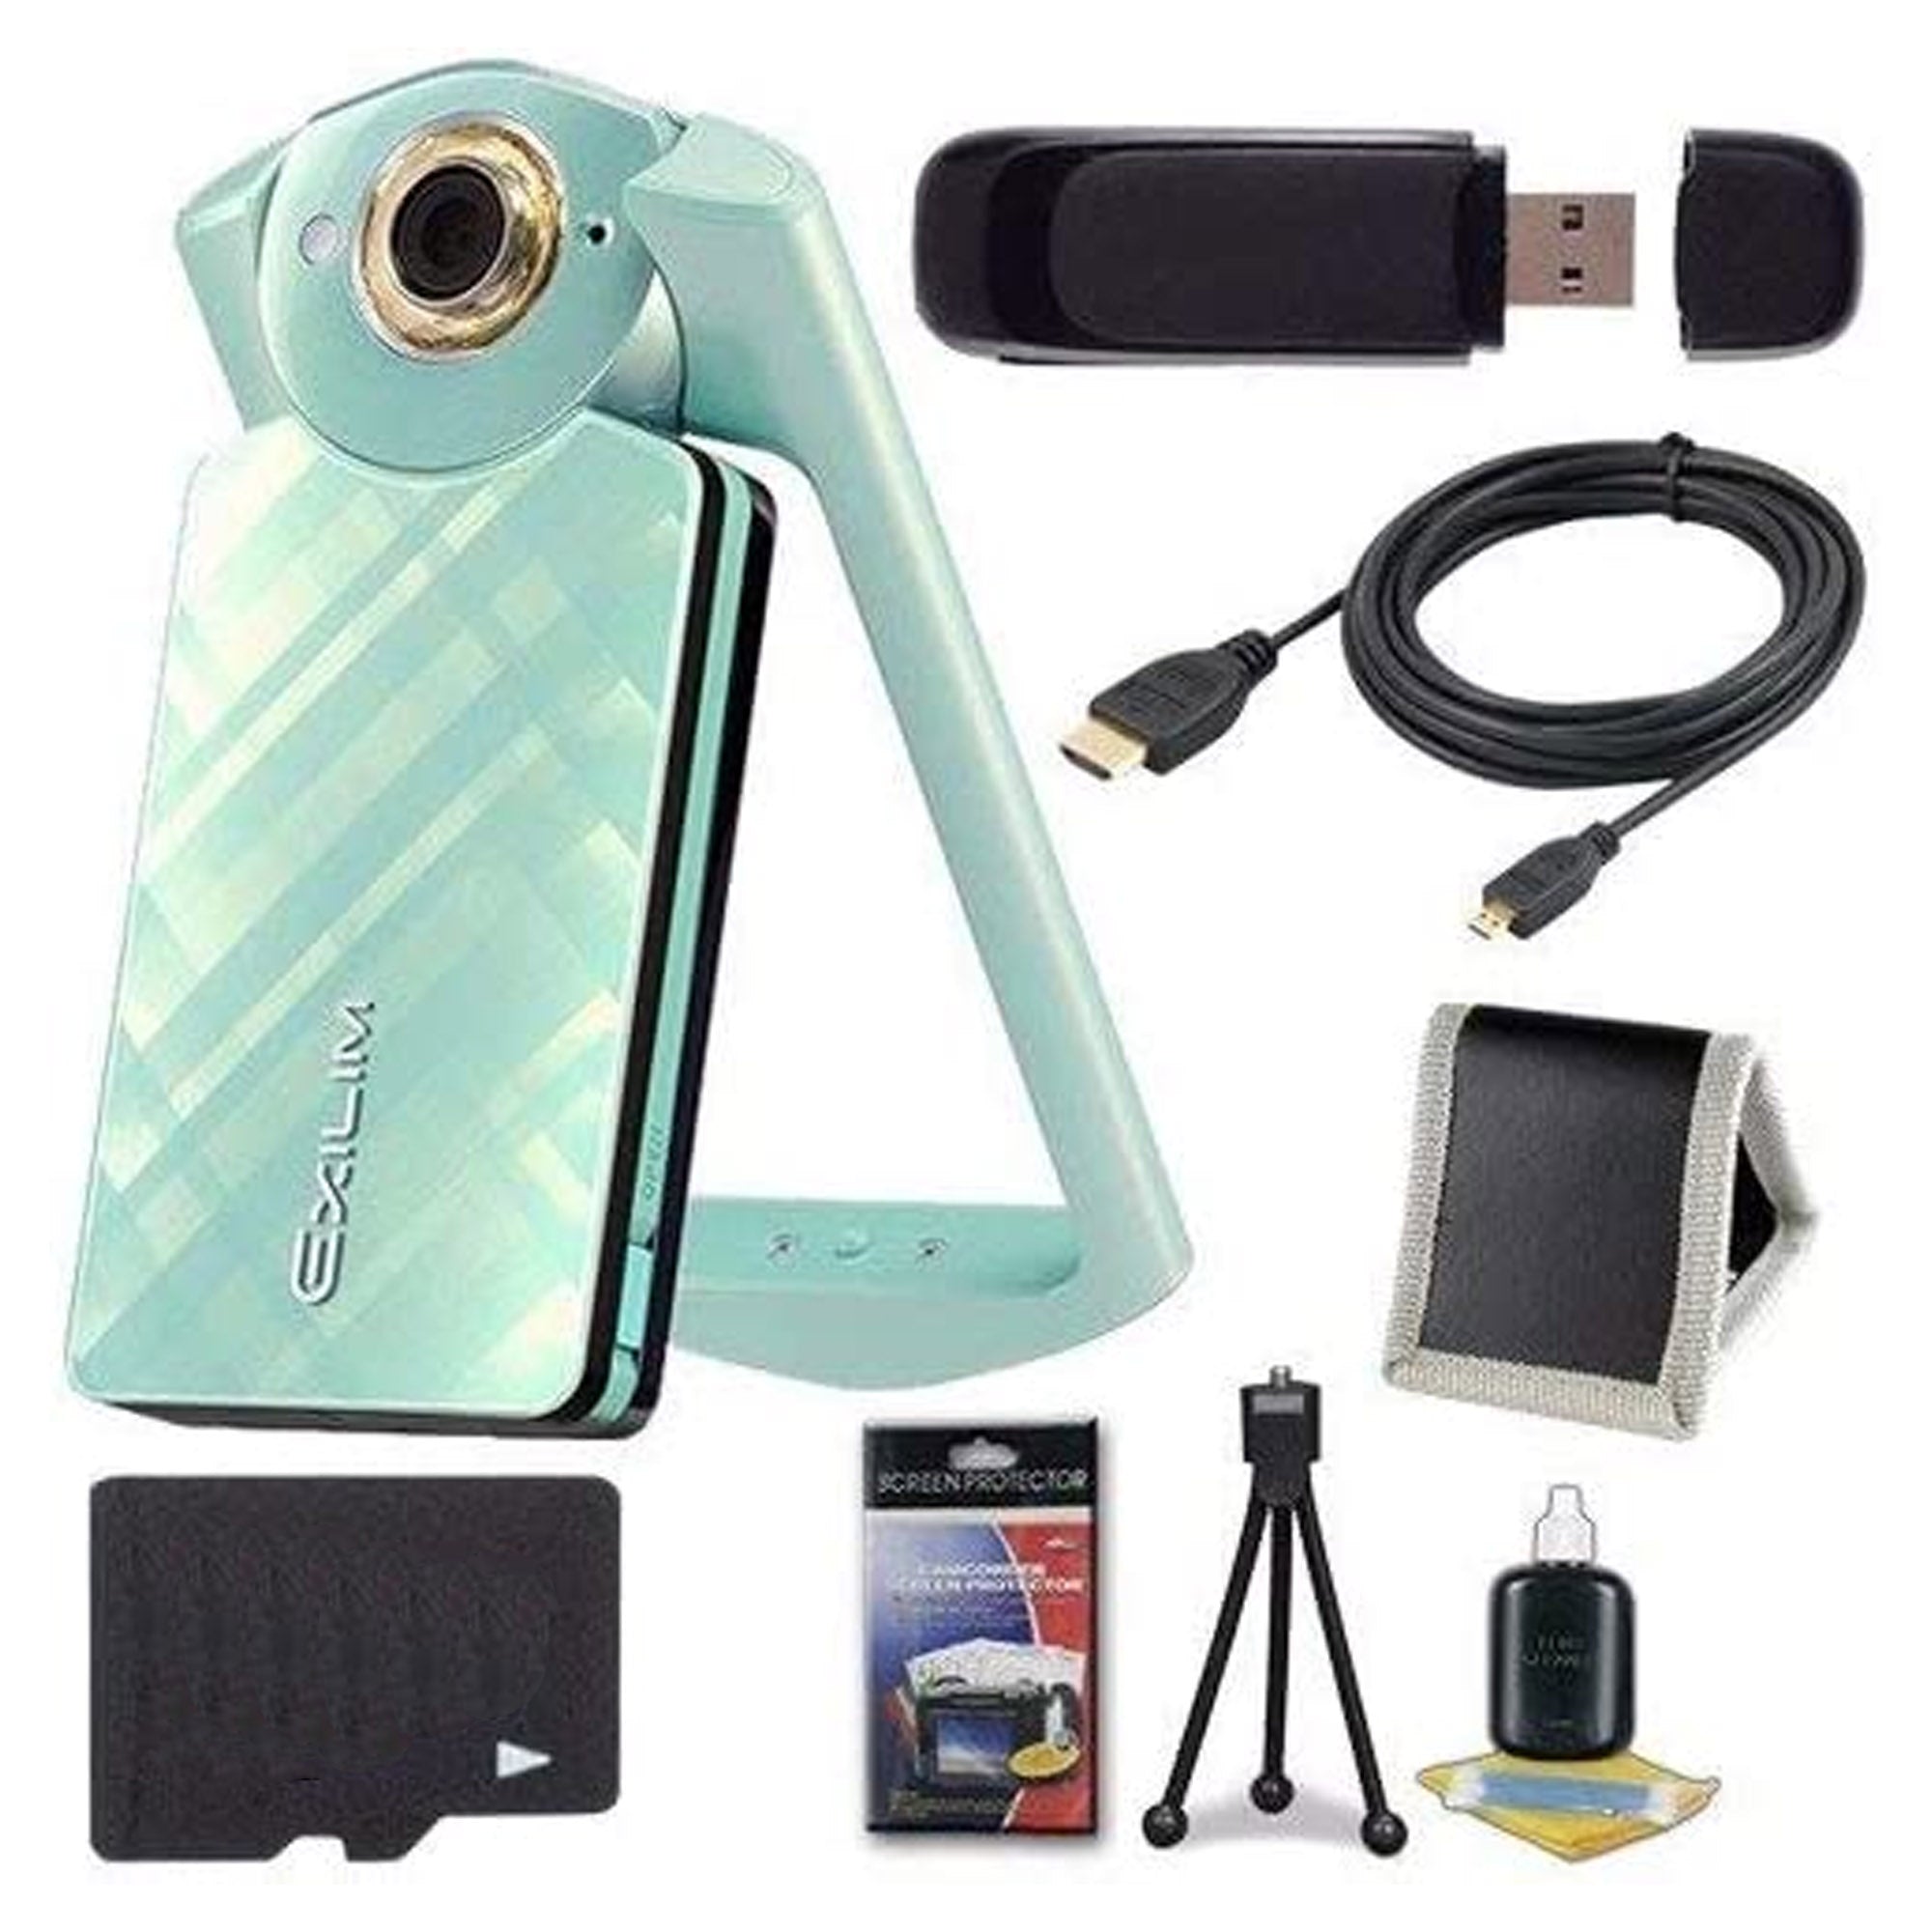 6Ave Casio EX-TR60 Self Portrait/Selfie Digital Camera (Green) + 32GB microSD Class 10 Memory Card + Micro HDMI Cable +